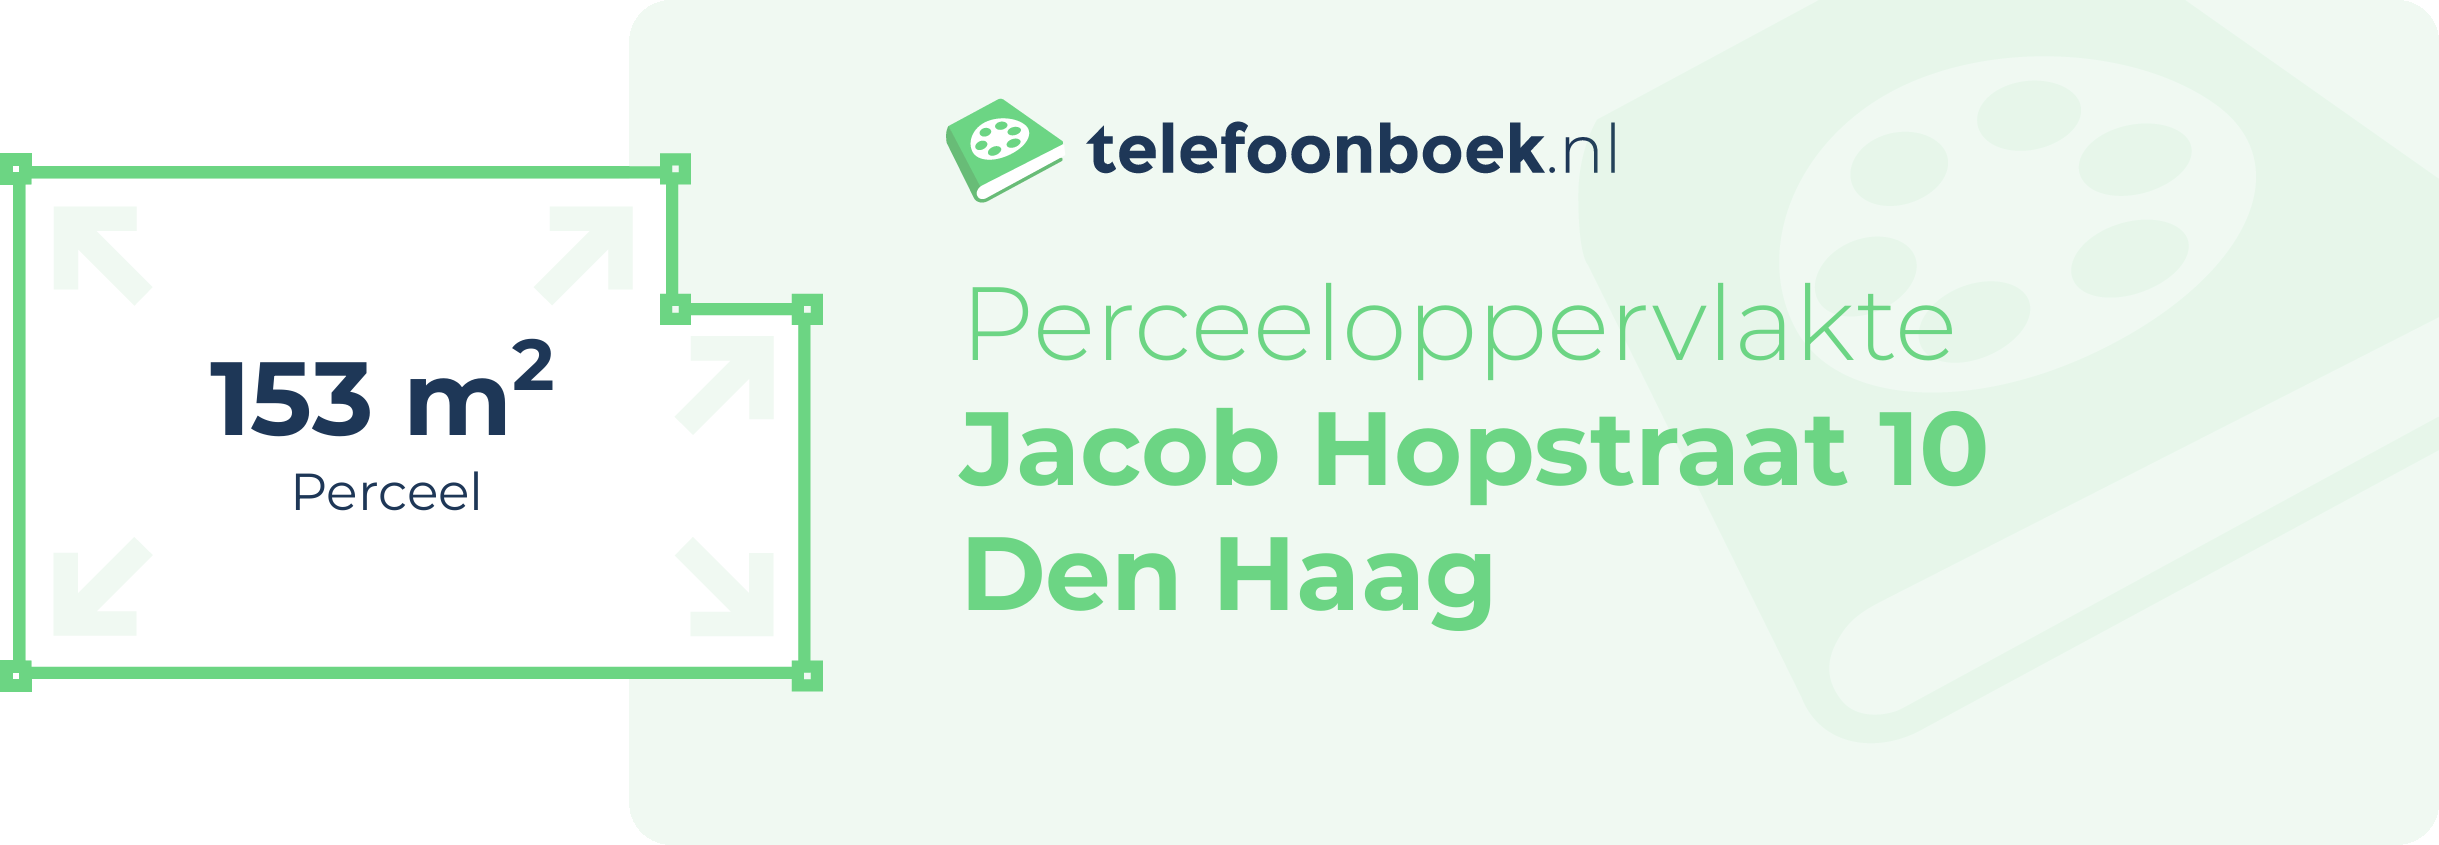 Perceeloppervlakte Jacob Hopstraat 10 Den Haag